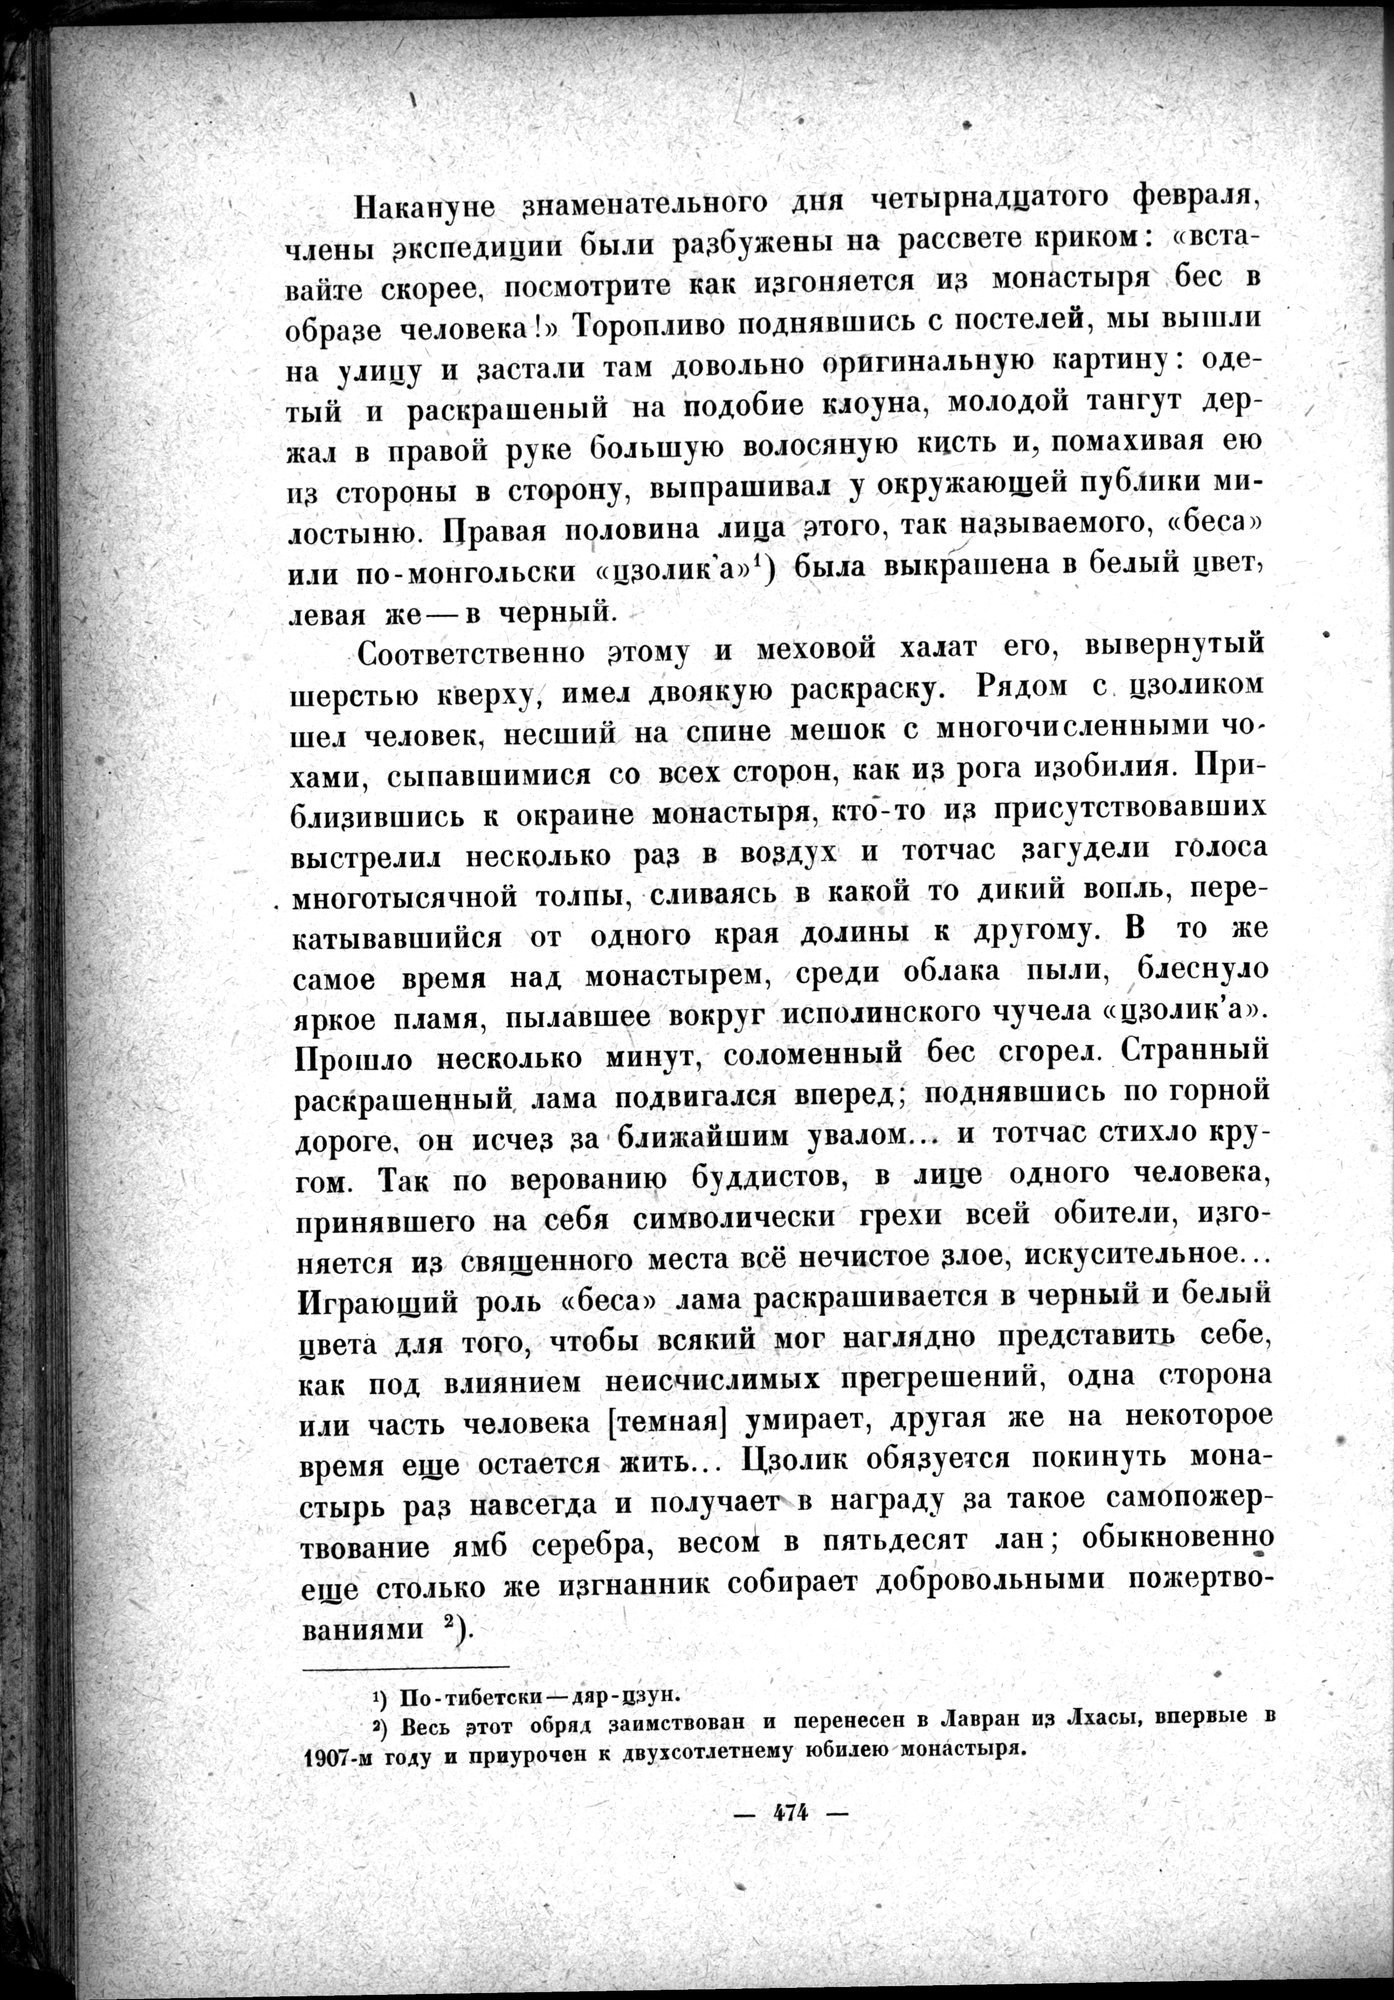 Mongoliya i Amdo i mertby gorod Khara-Khoto : vol.1 / Page 542 (Grayscale High Resolution Image)